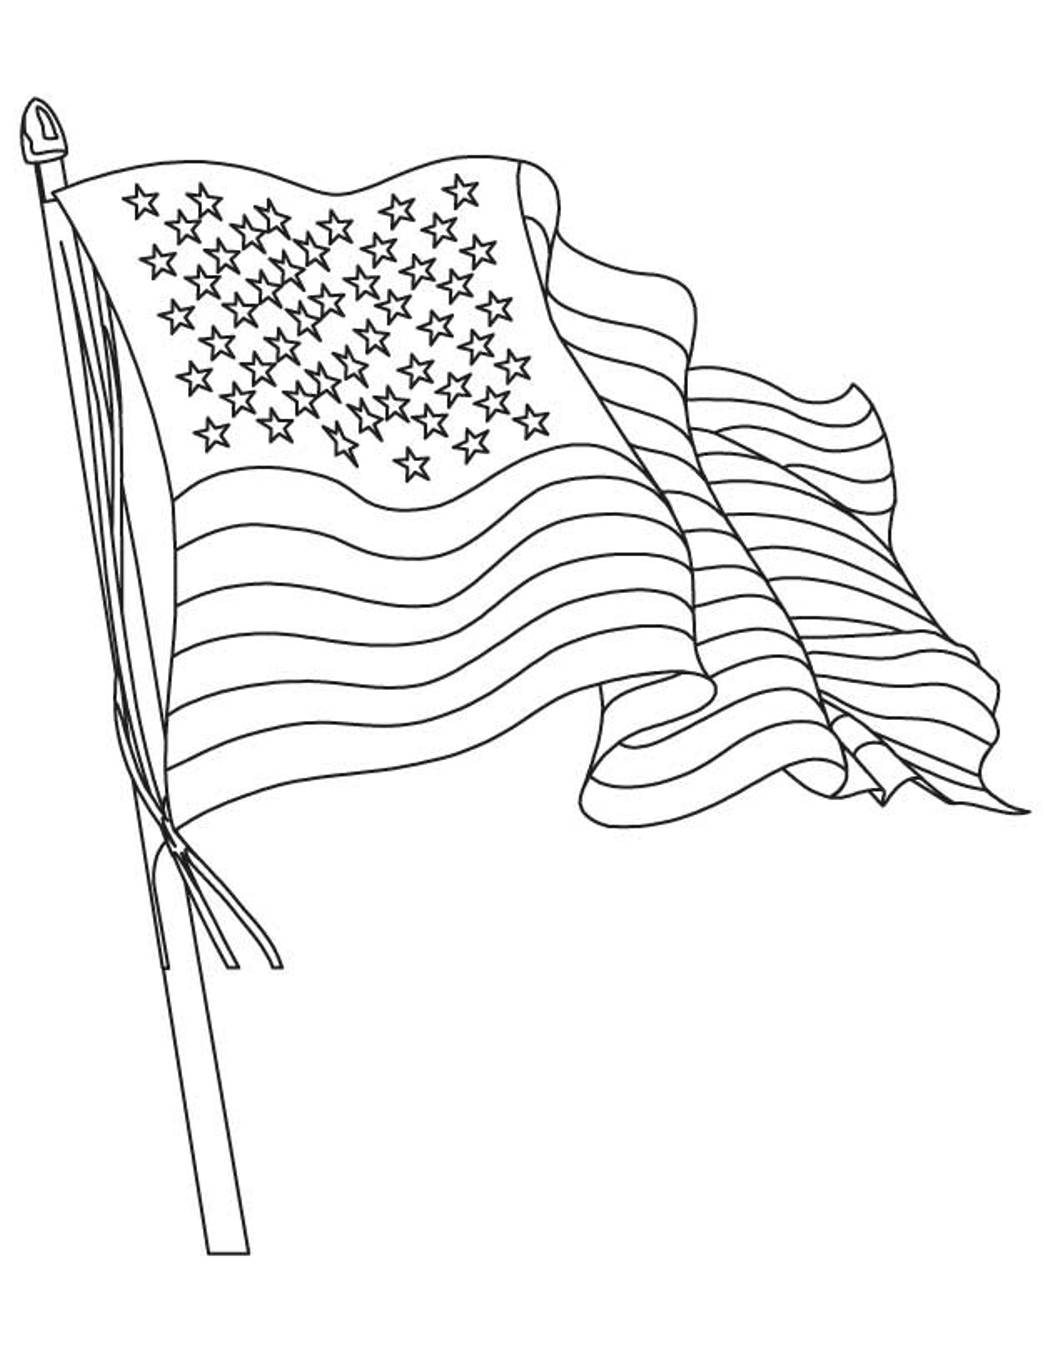 waving-american-flag-drawing-at-getdrawings-free-download